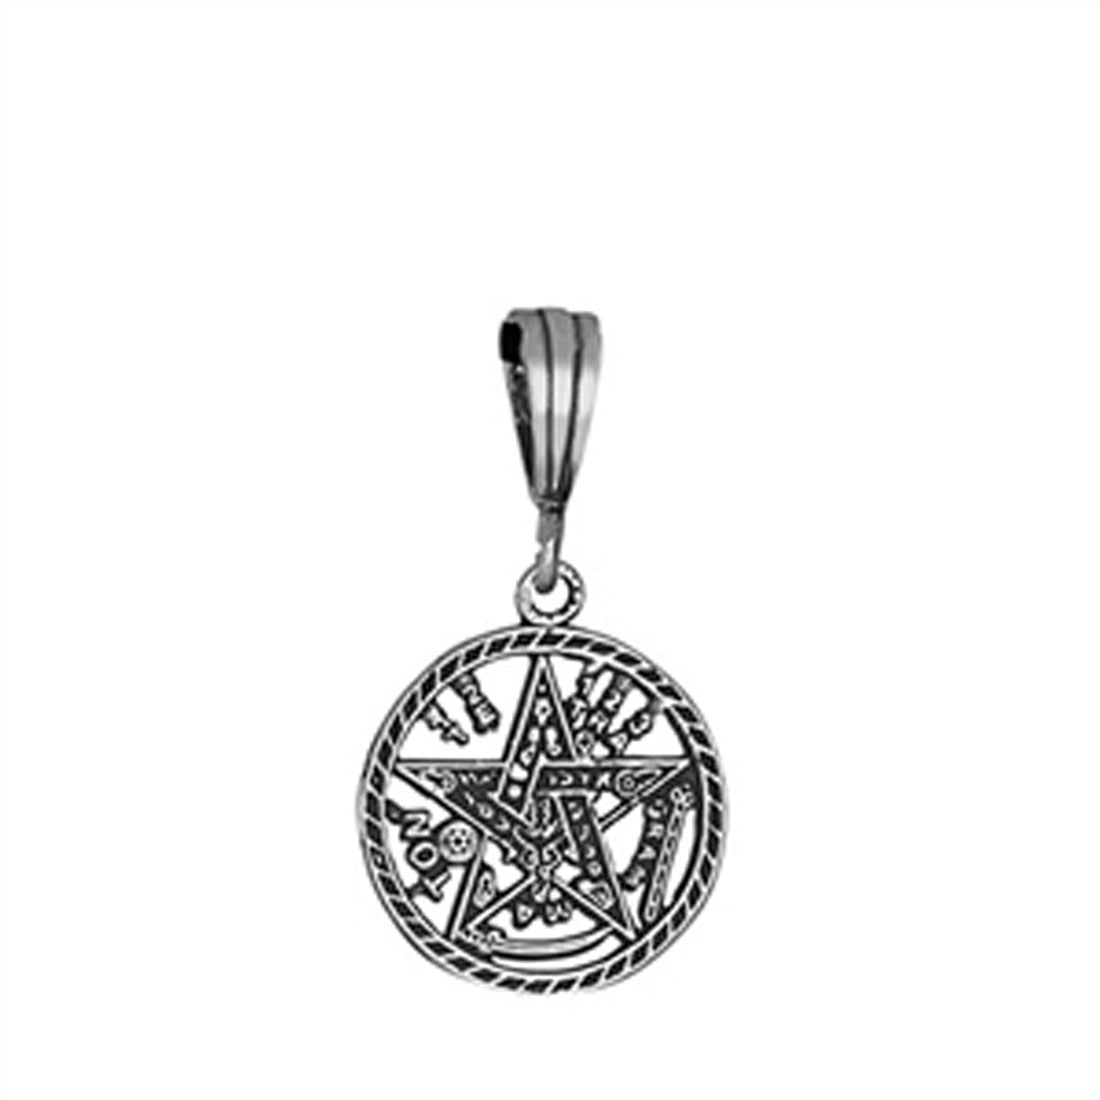 Pentagram Pendant 925 Sterling Silver Oxidize charm 17mm Long-Blue Apple Jewelary